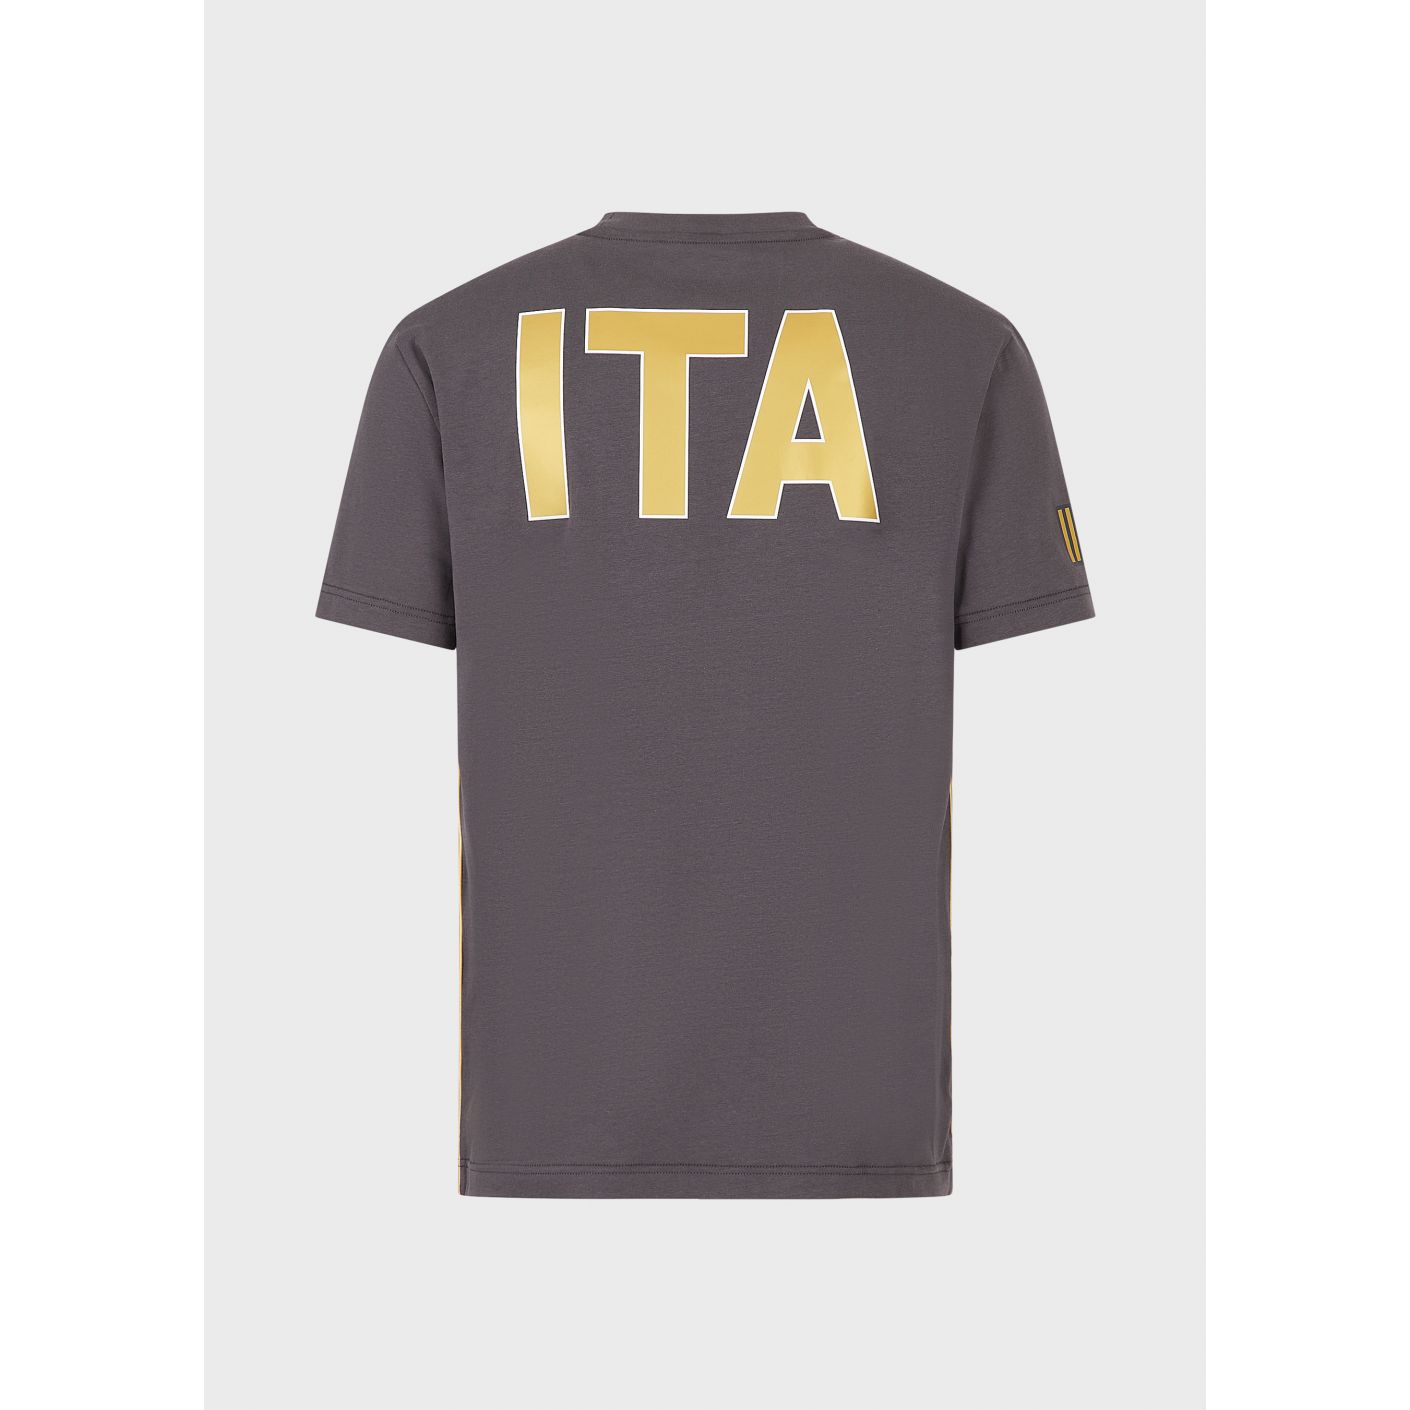 EA7 T-Shirt FISI da Uomo